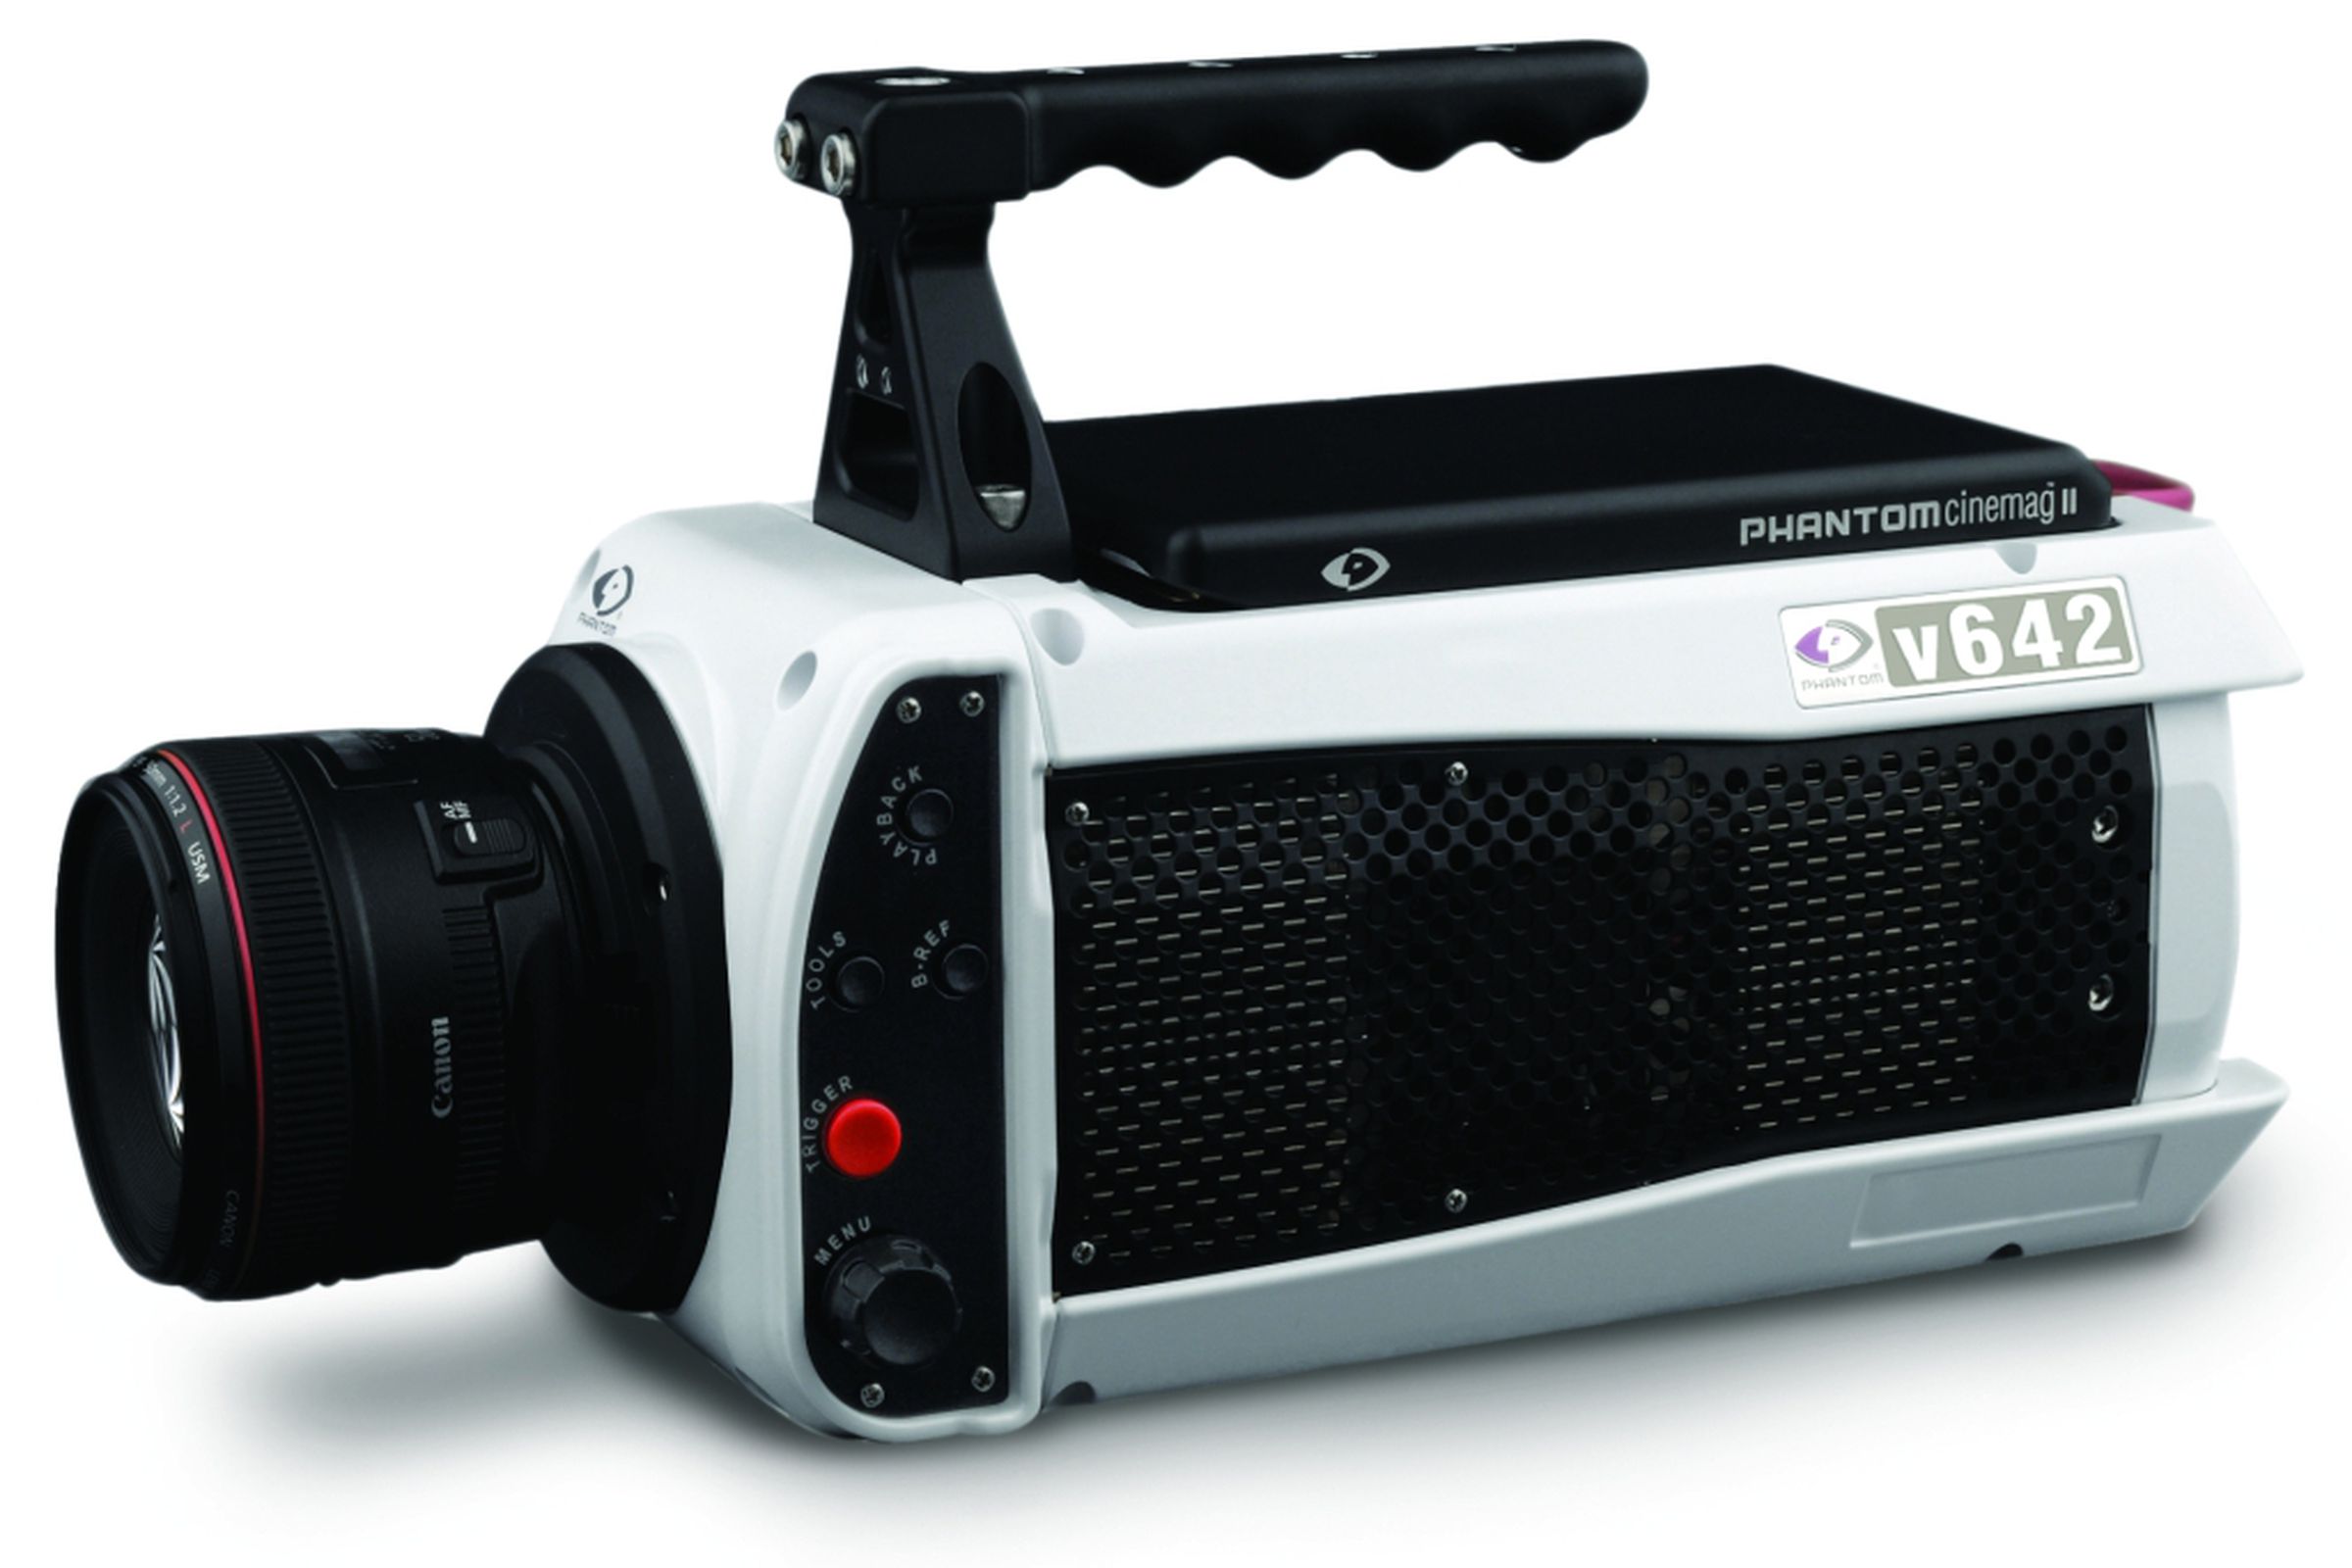 Phantom v642 high speed camera stock press 1024